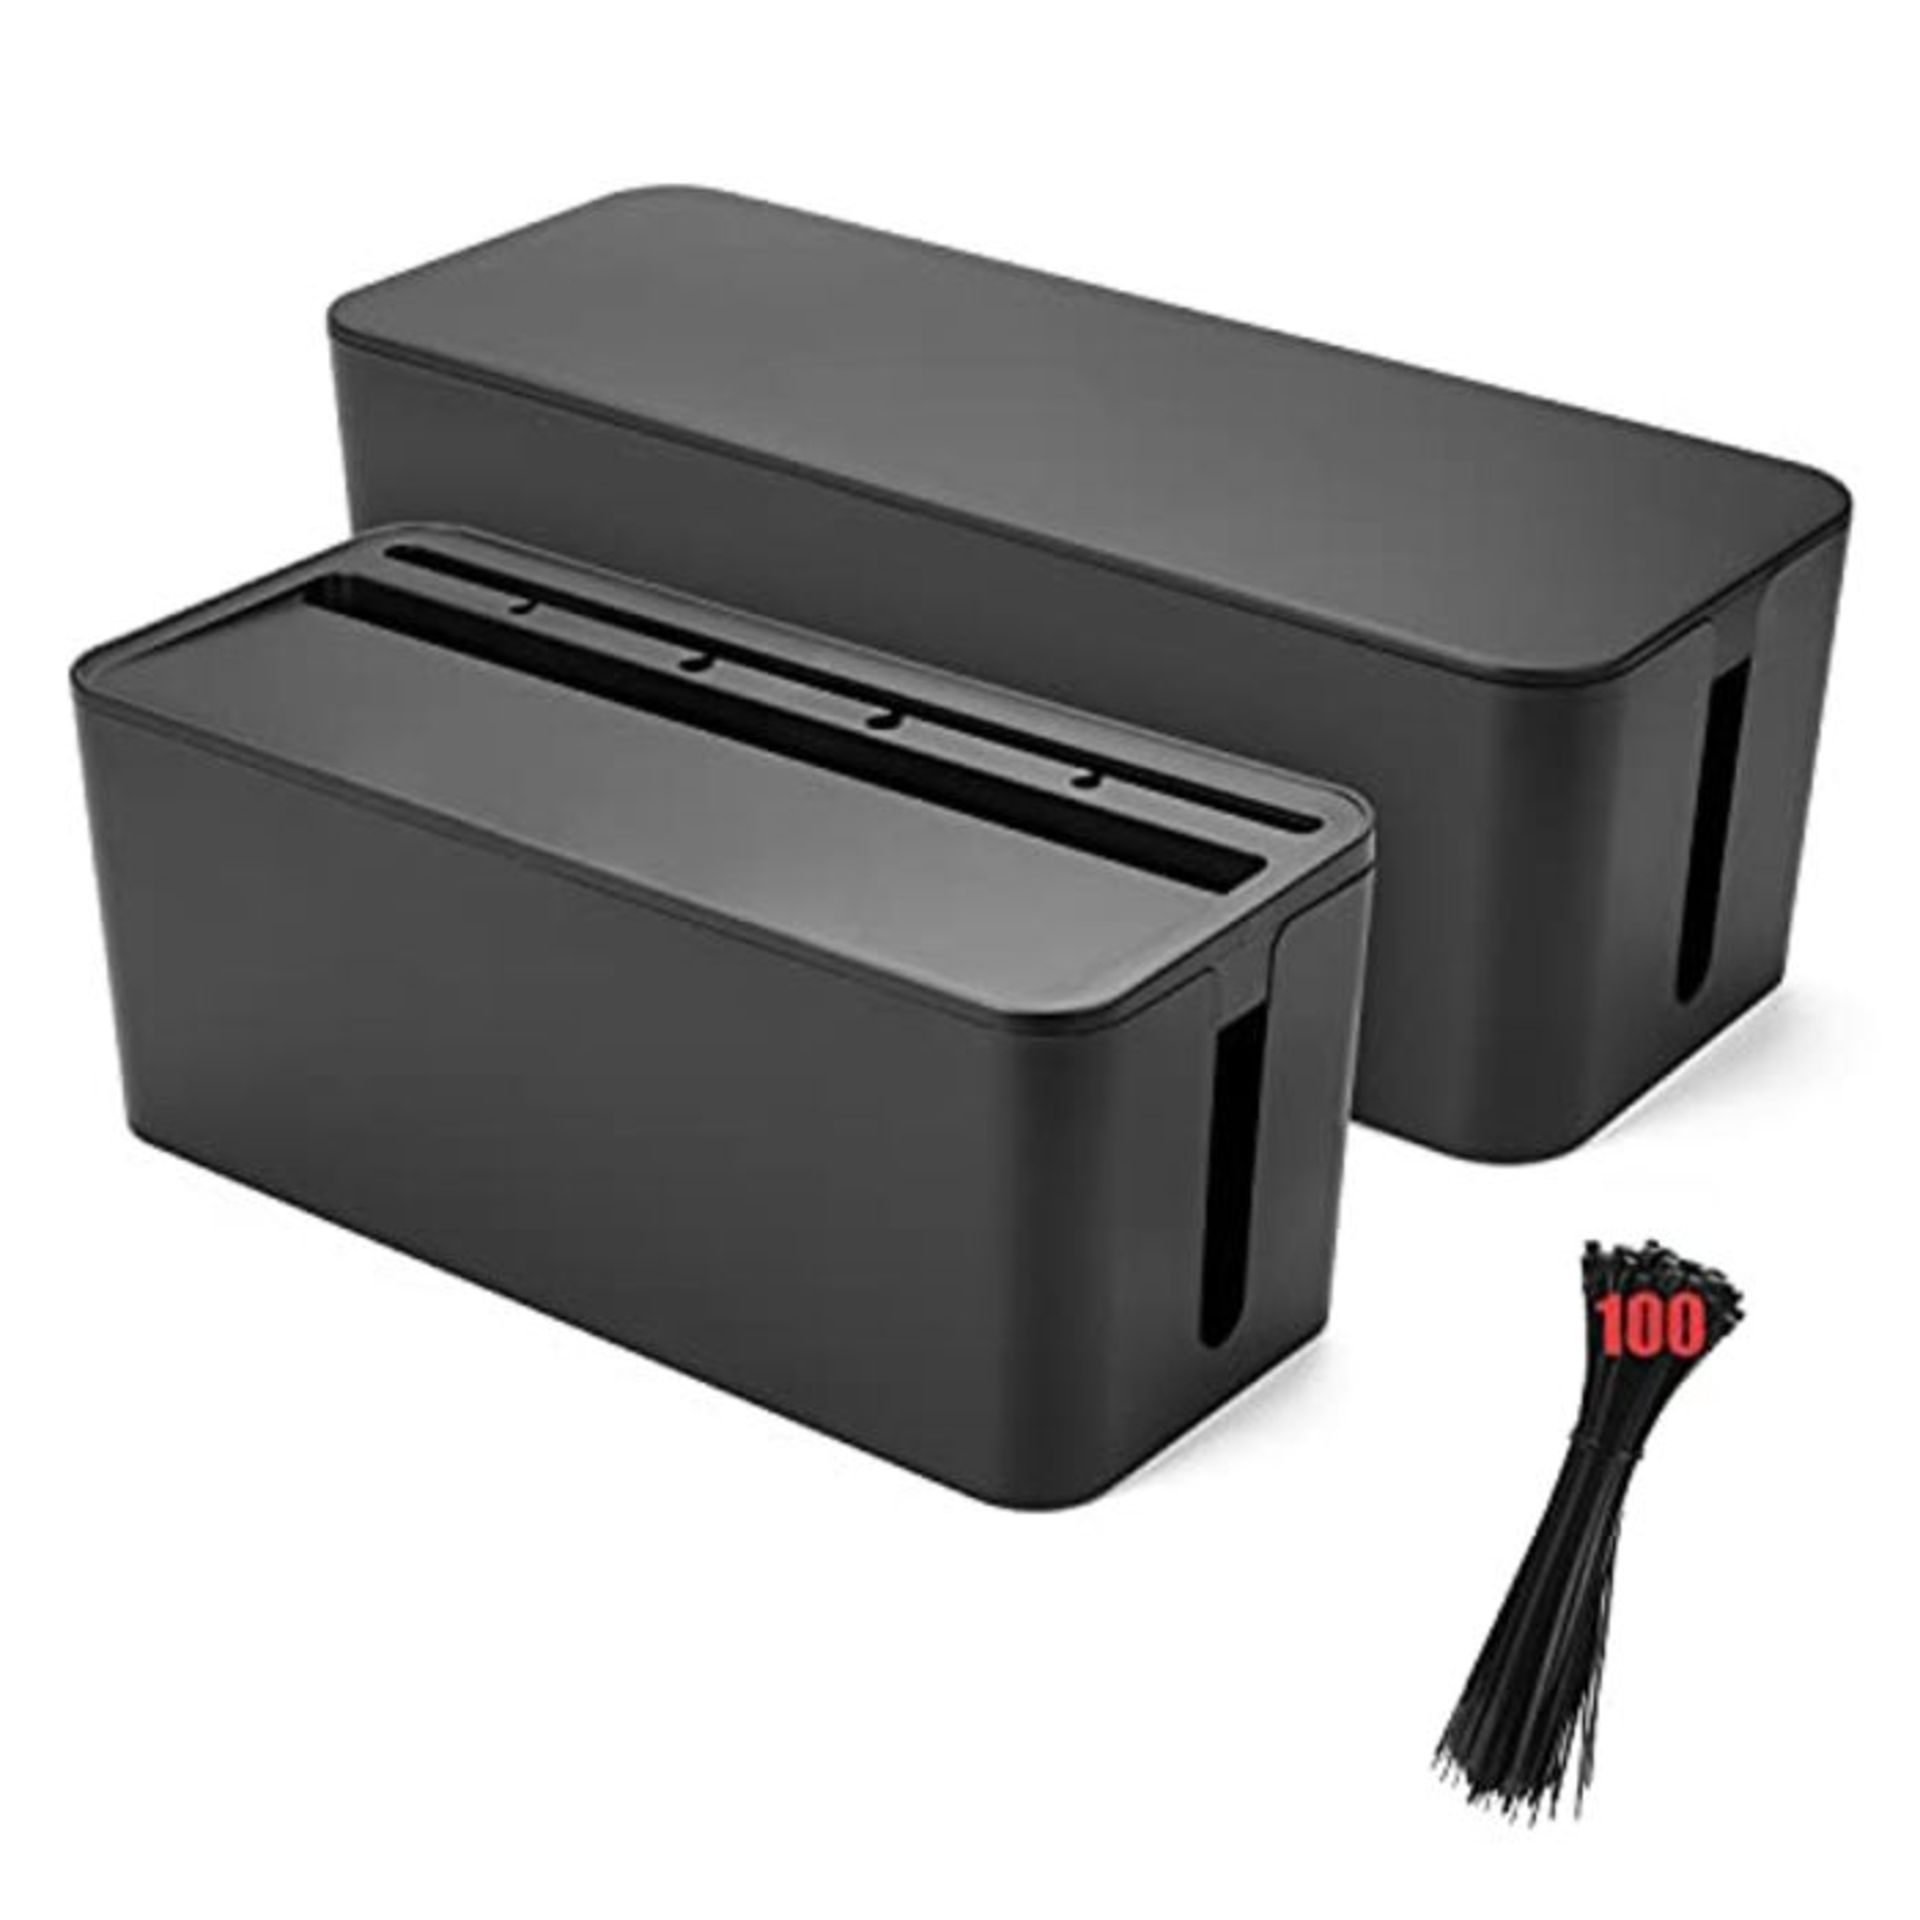 Uktunu Cable Management Box for Hiding Cable Storage Box for Cable Management Charging